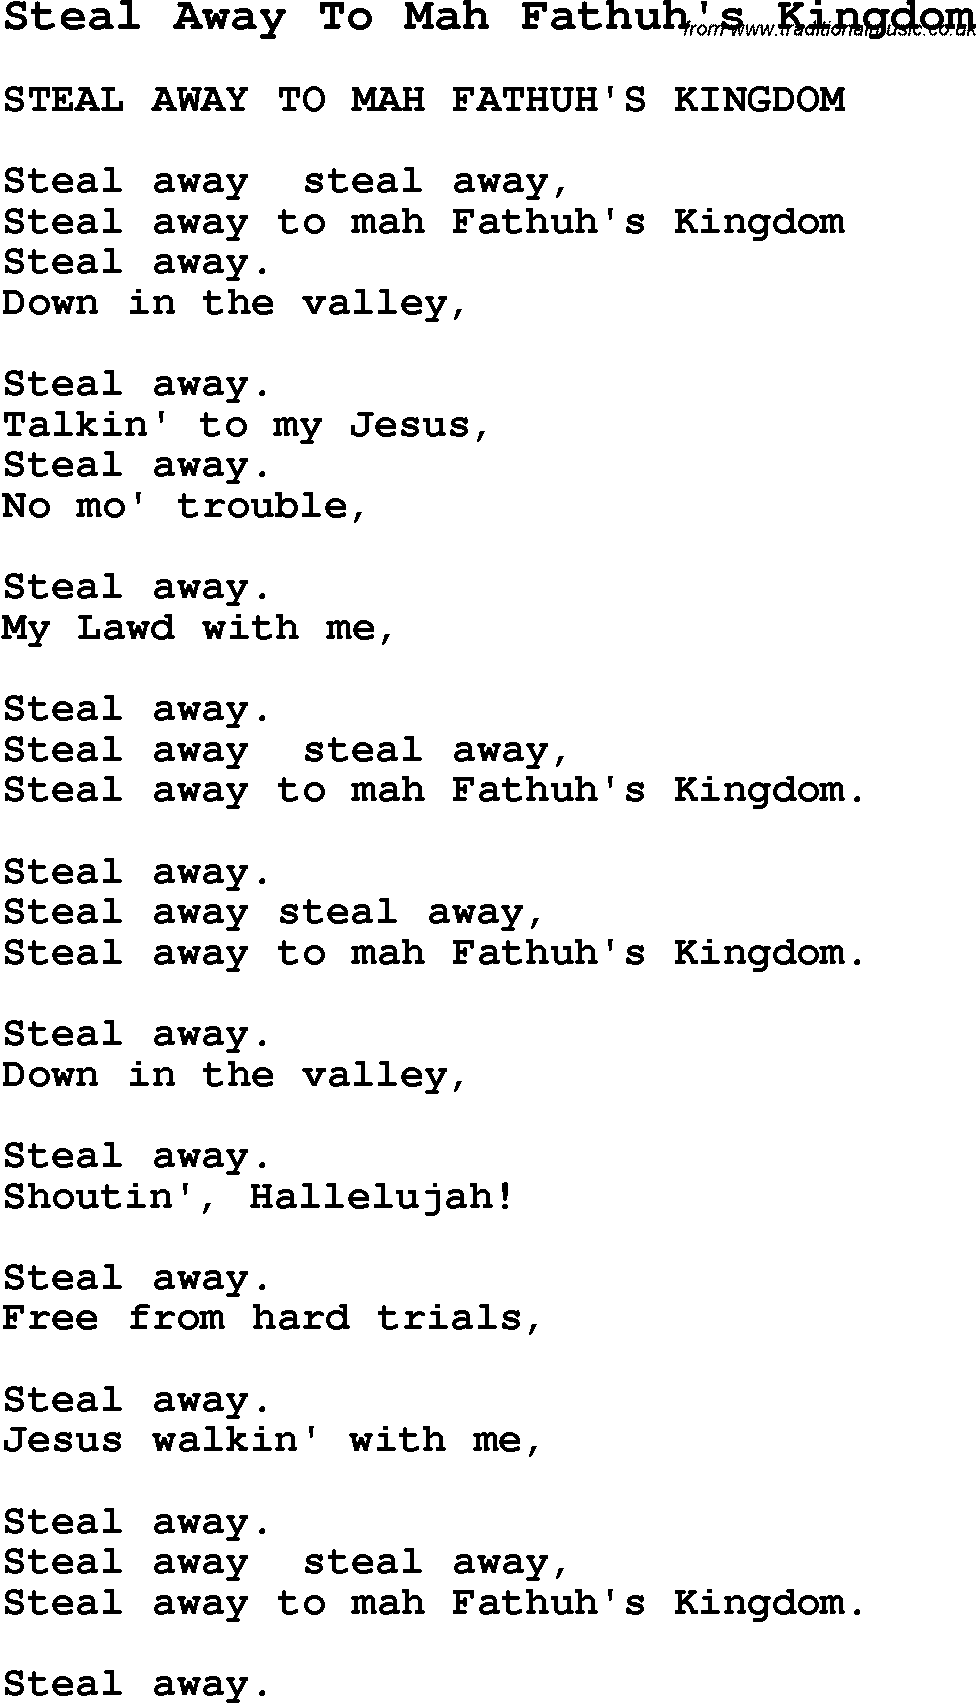 Negro Spiritual Song Lyrics for Steal Away To Mah Fathuh's Kingdom